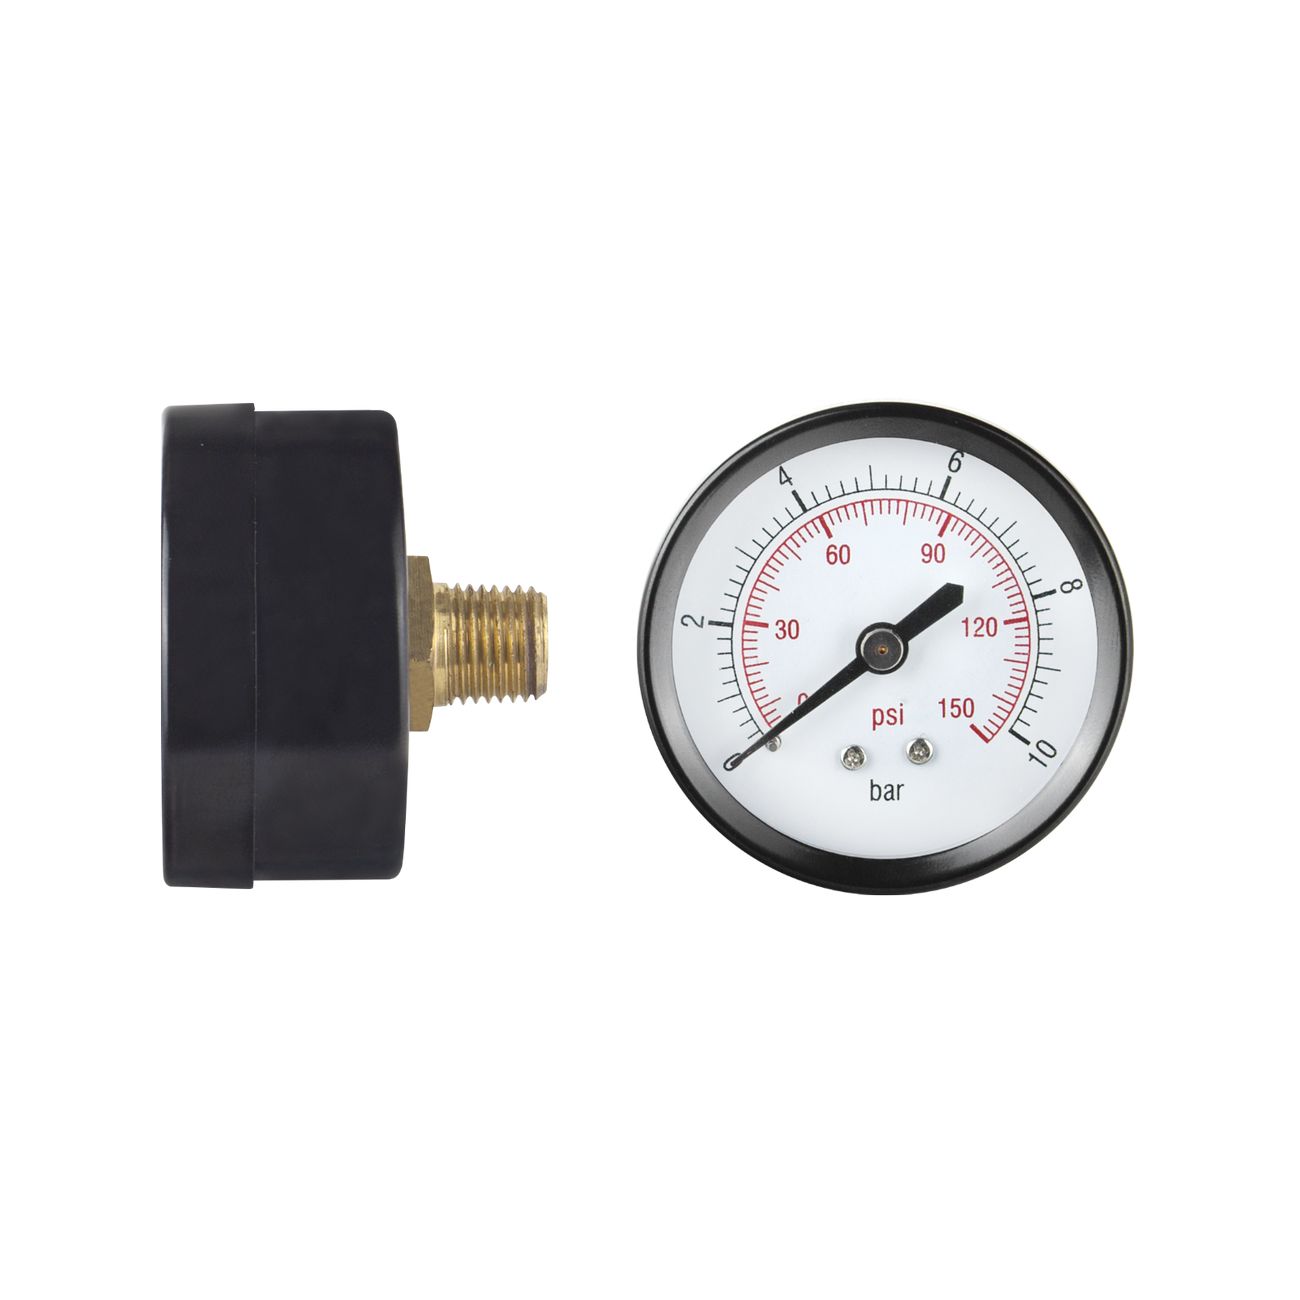 Apometre, manometre si termometre  - Manometru pt apa axial 0-12bar 1/4, bilden.ro